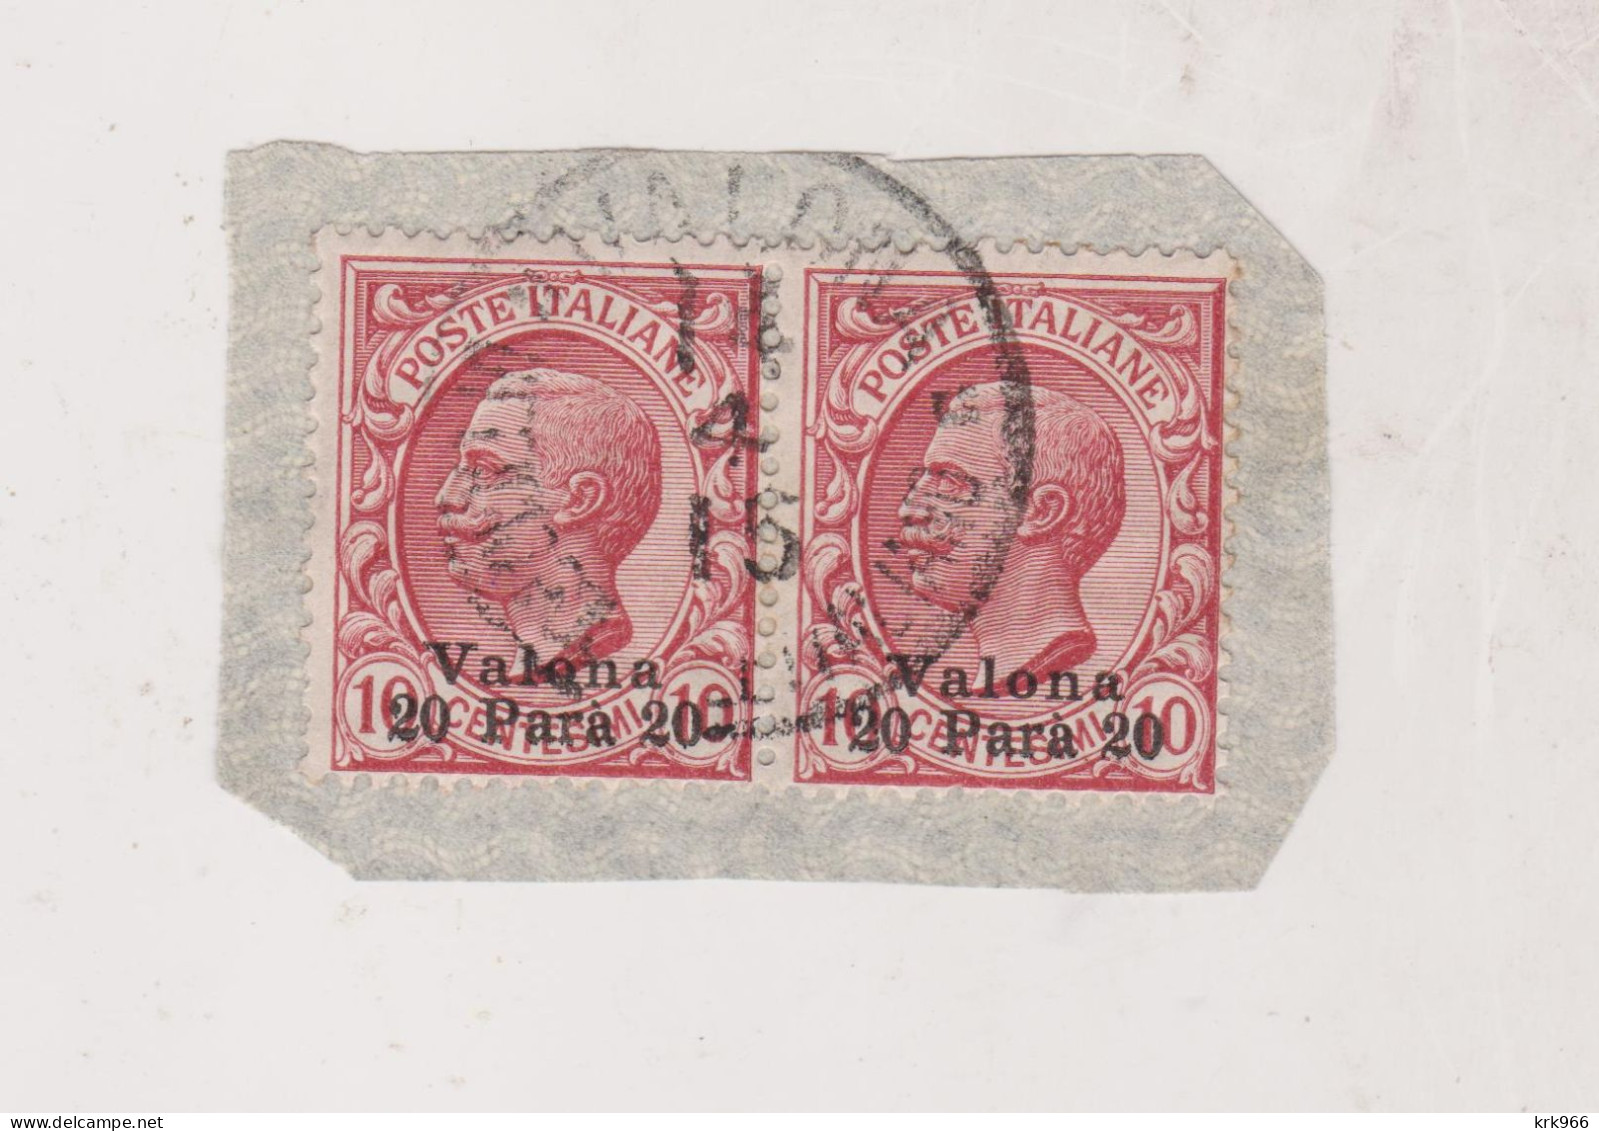 ITALY  ALBANIA VALONA Nice Stamps Used On Piece - Albania